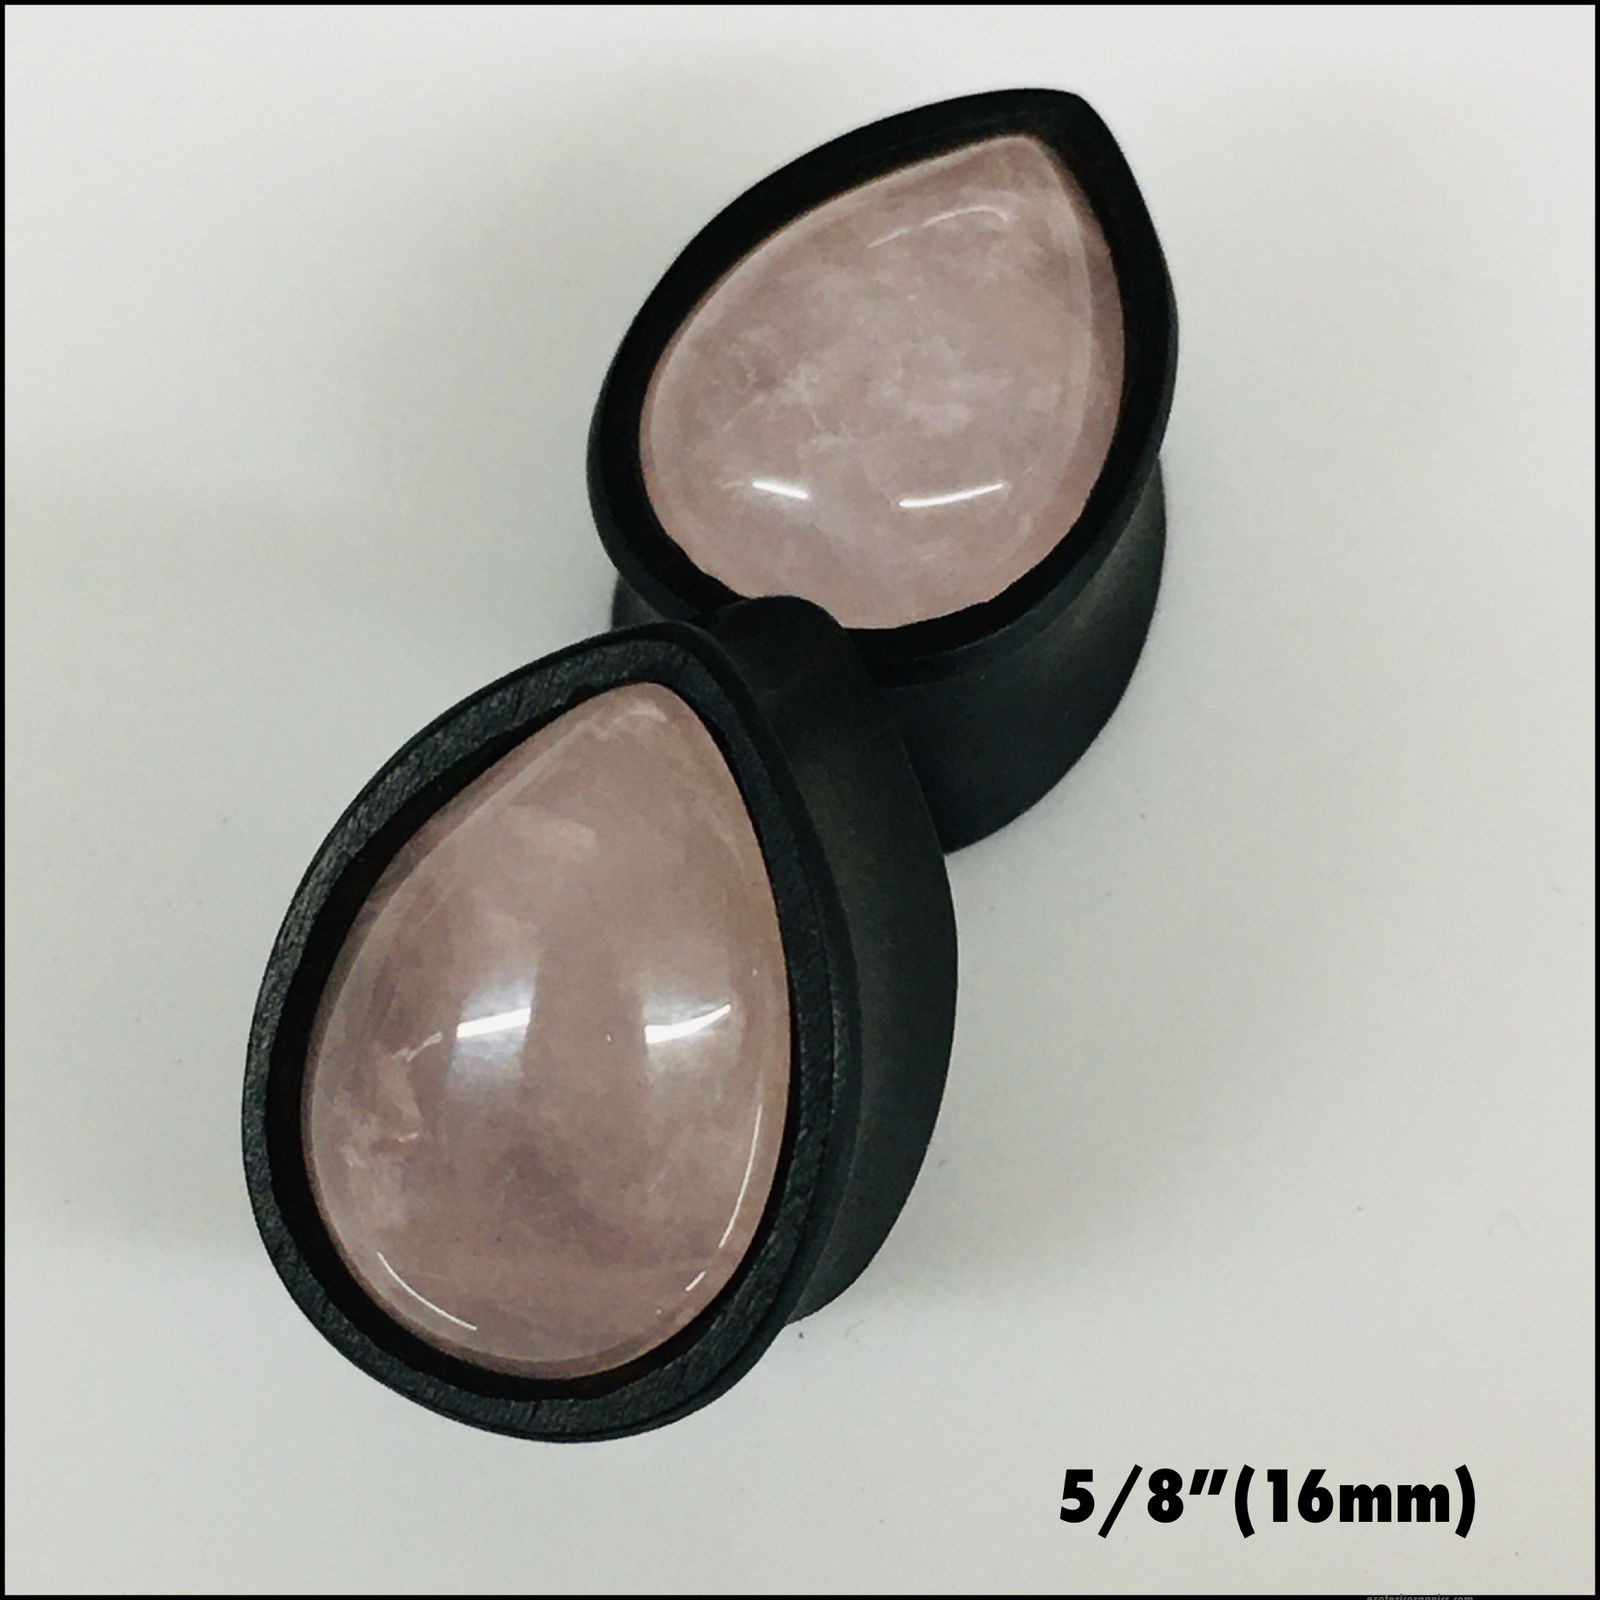 Ebony Stone Medium Rose Quartz Teardrop Plugs (LIMITIED EDITION)